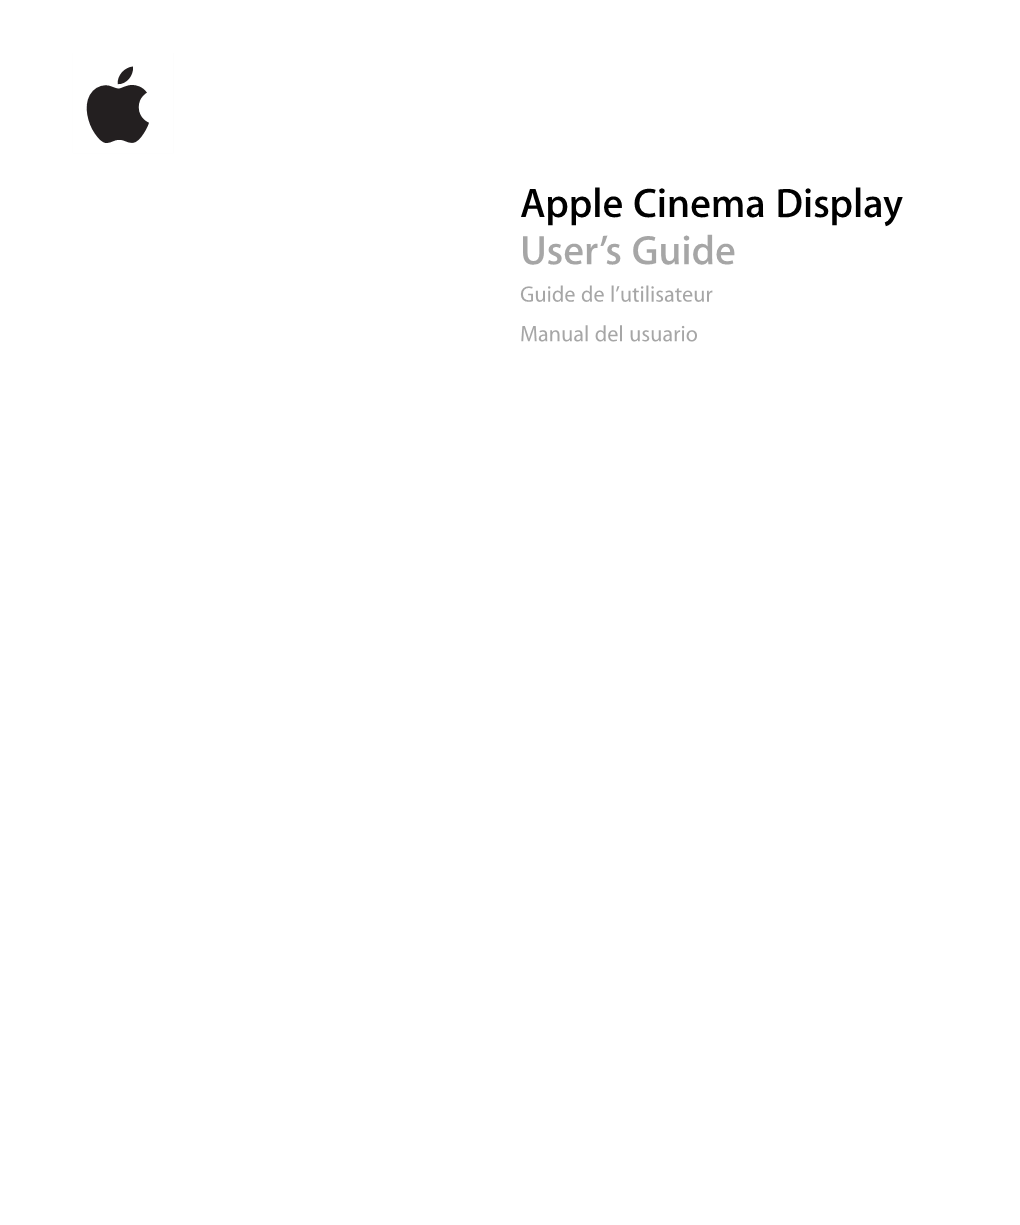 Cinema Display User's Guide